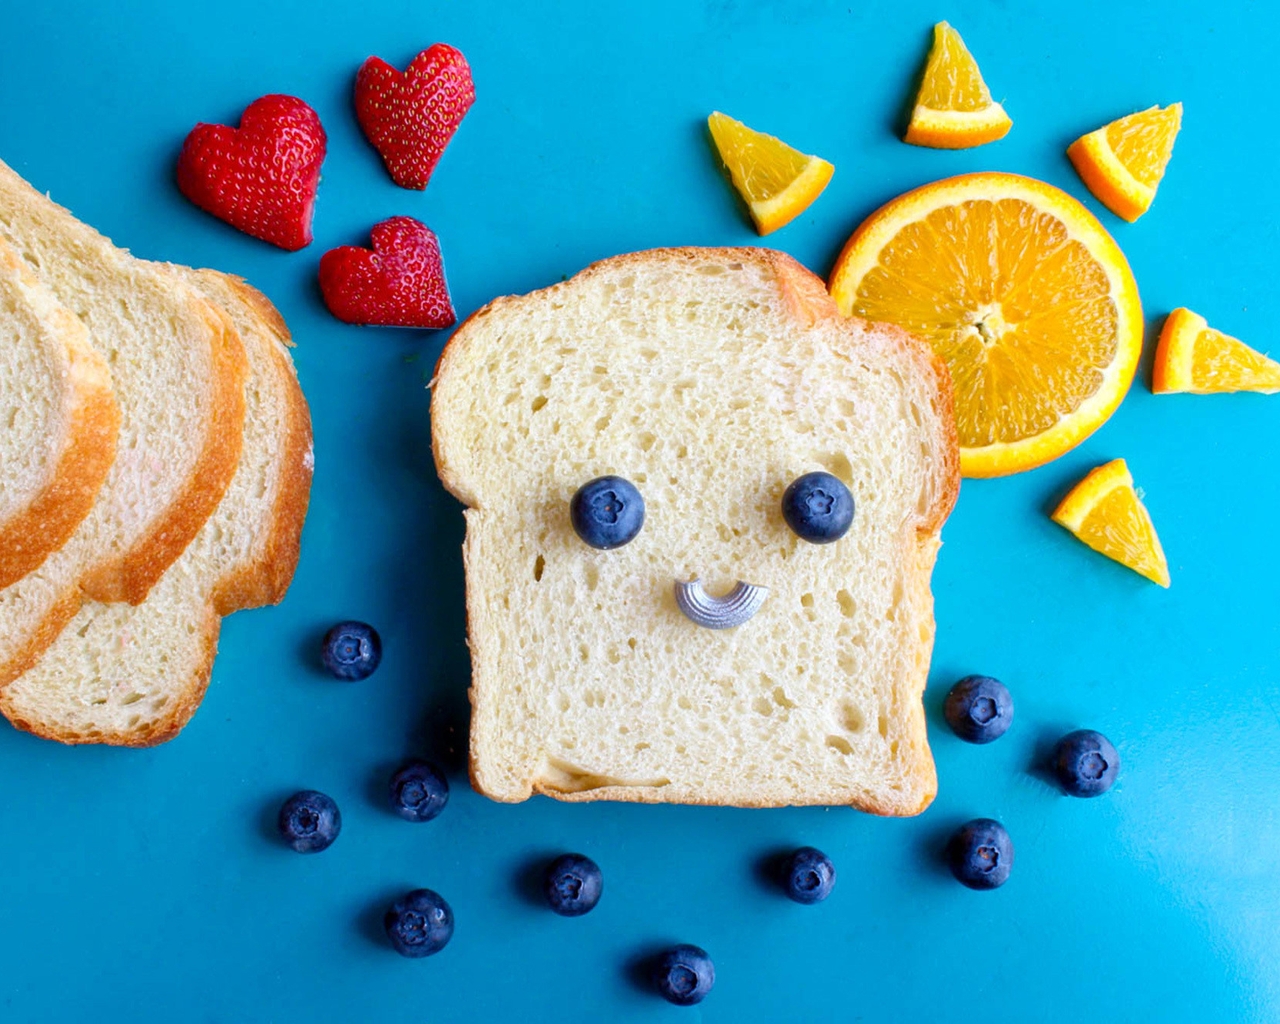 Image: Bread, blueberries, strawberries, berries, orange, spaghetti, sun, face, smile, mood, blue background